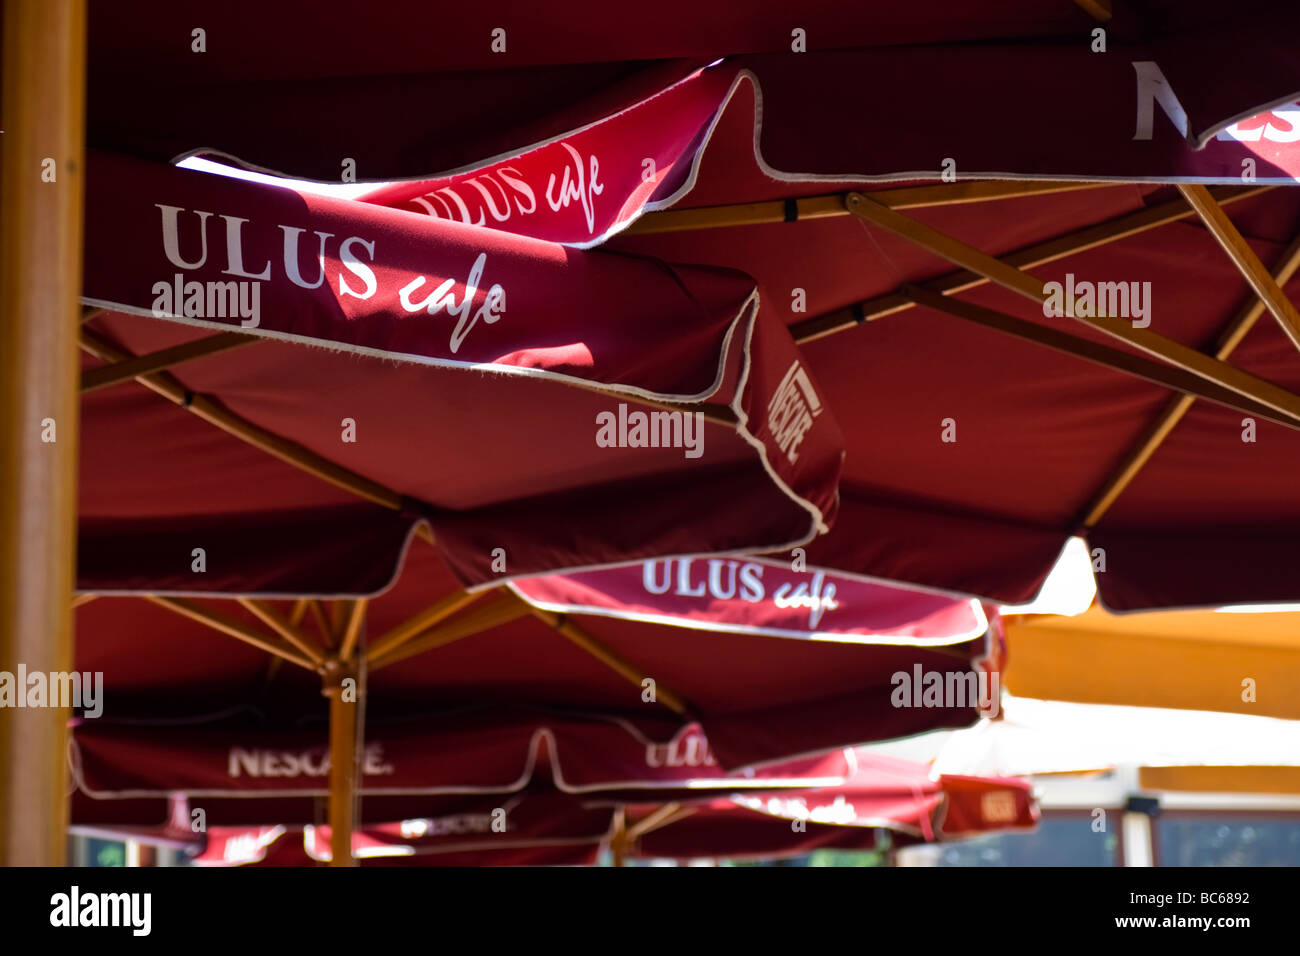 Turkey , Istanbul , parasols or sun umbrellas in the Ulus cafe restaurant on hills overlooking Bosphorous Golden Horn or Halic Stock Photo